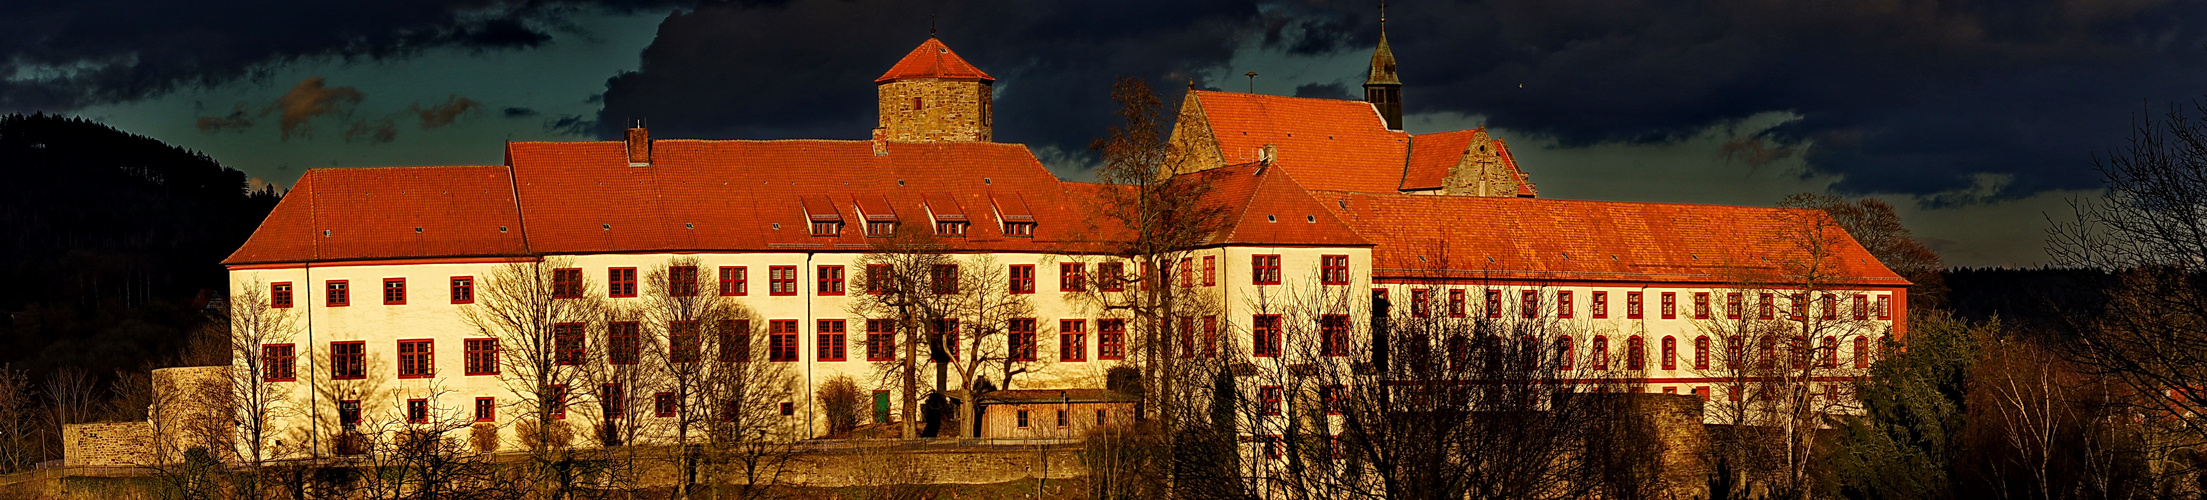 Bad Iburg - Schloss